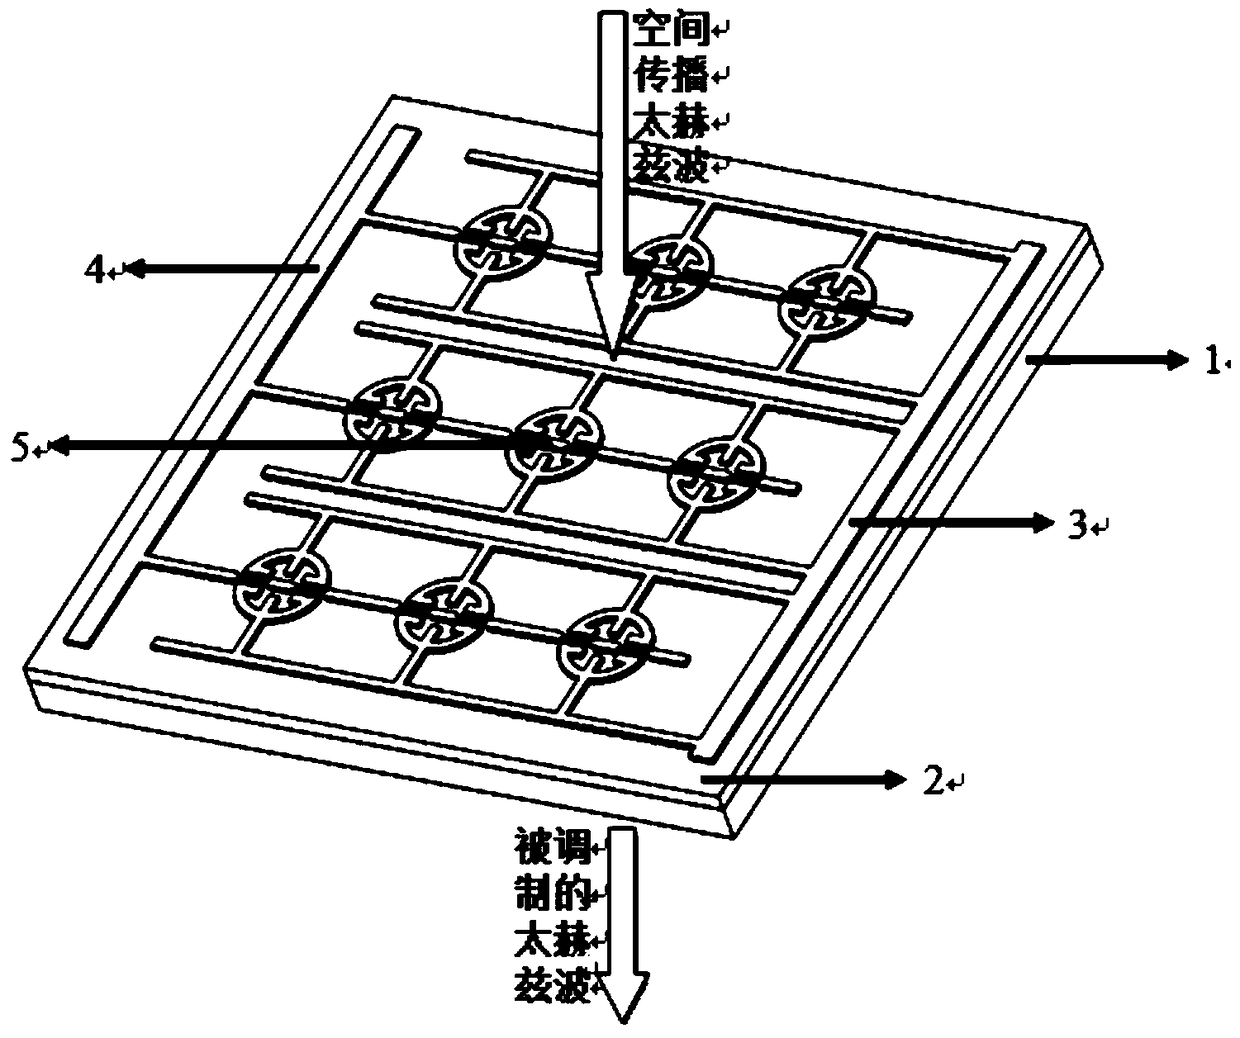 A Terahertz Spatial Phase Modulator Based on High Electron Mobility Transistor